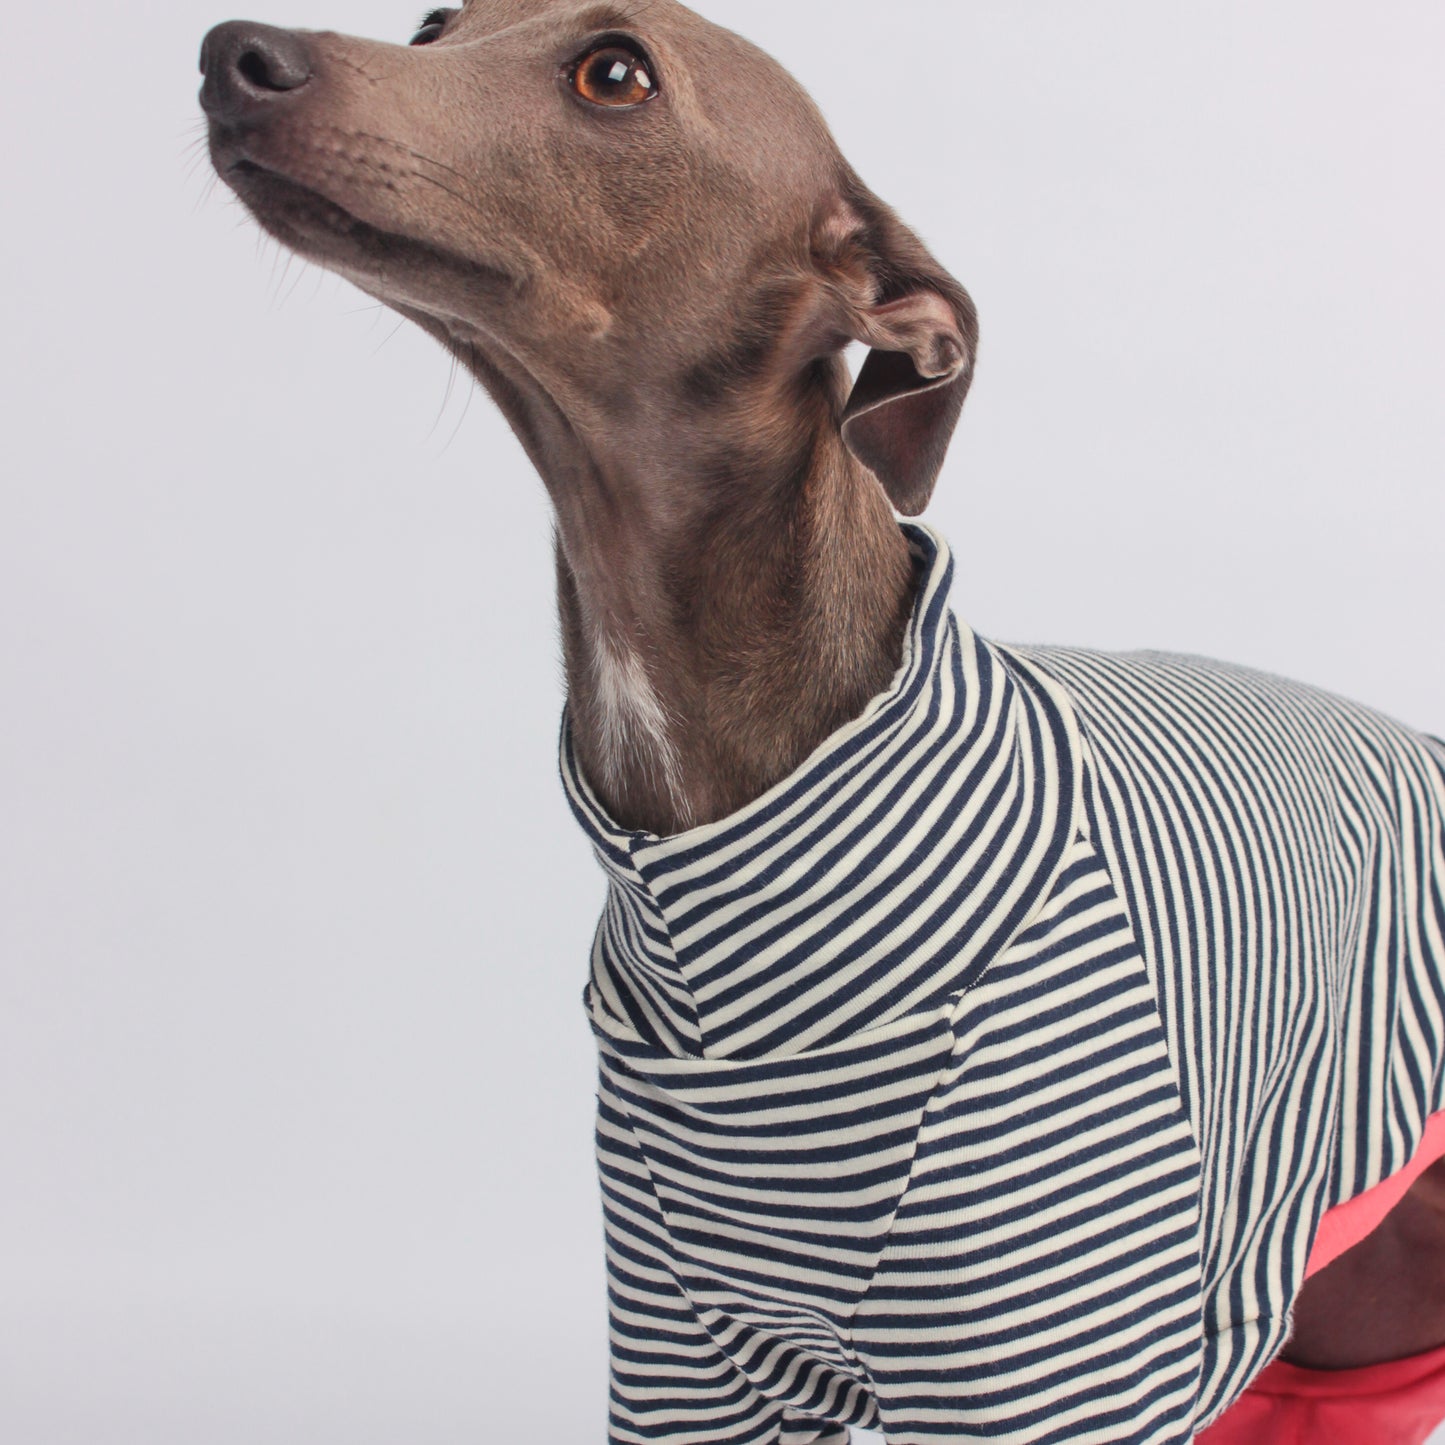 Organic cotton Italian Greyhound/whippet clothing, jumpsuit/jersey/onesie